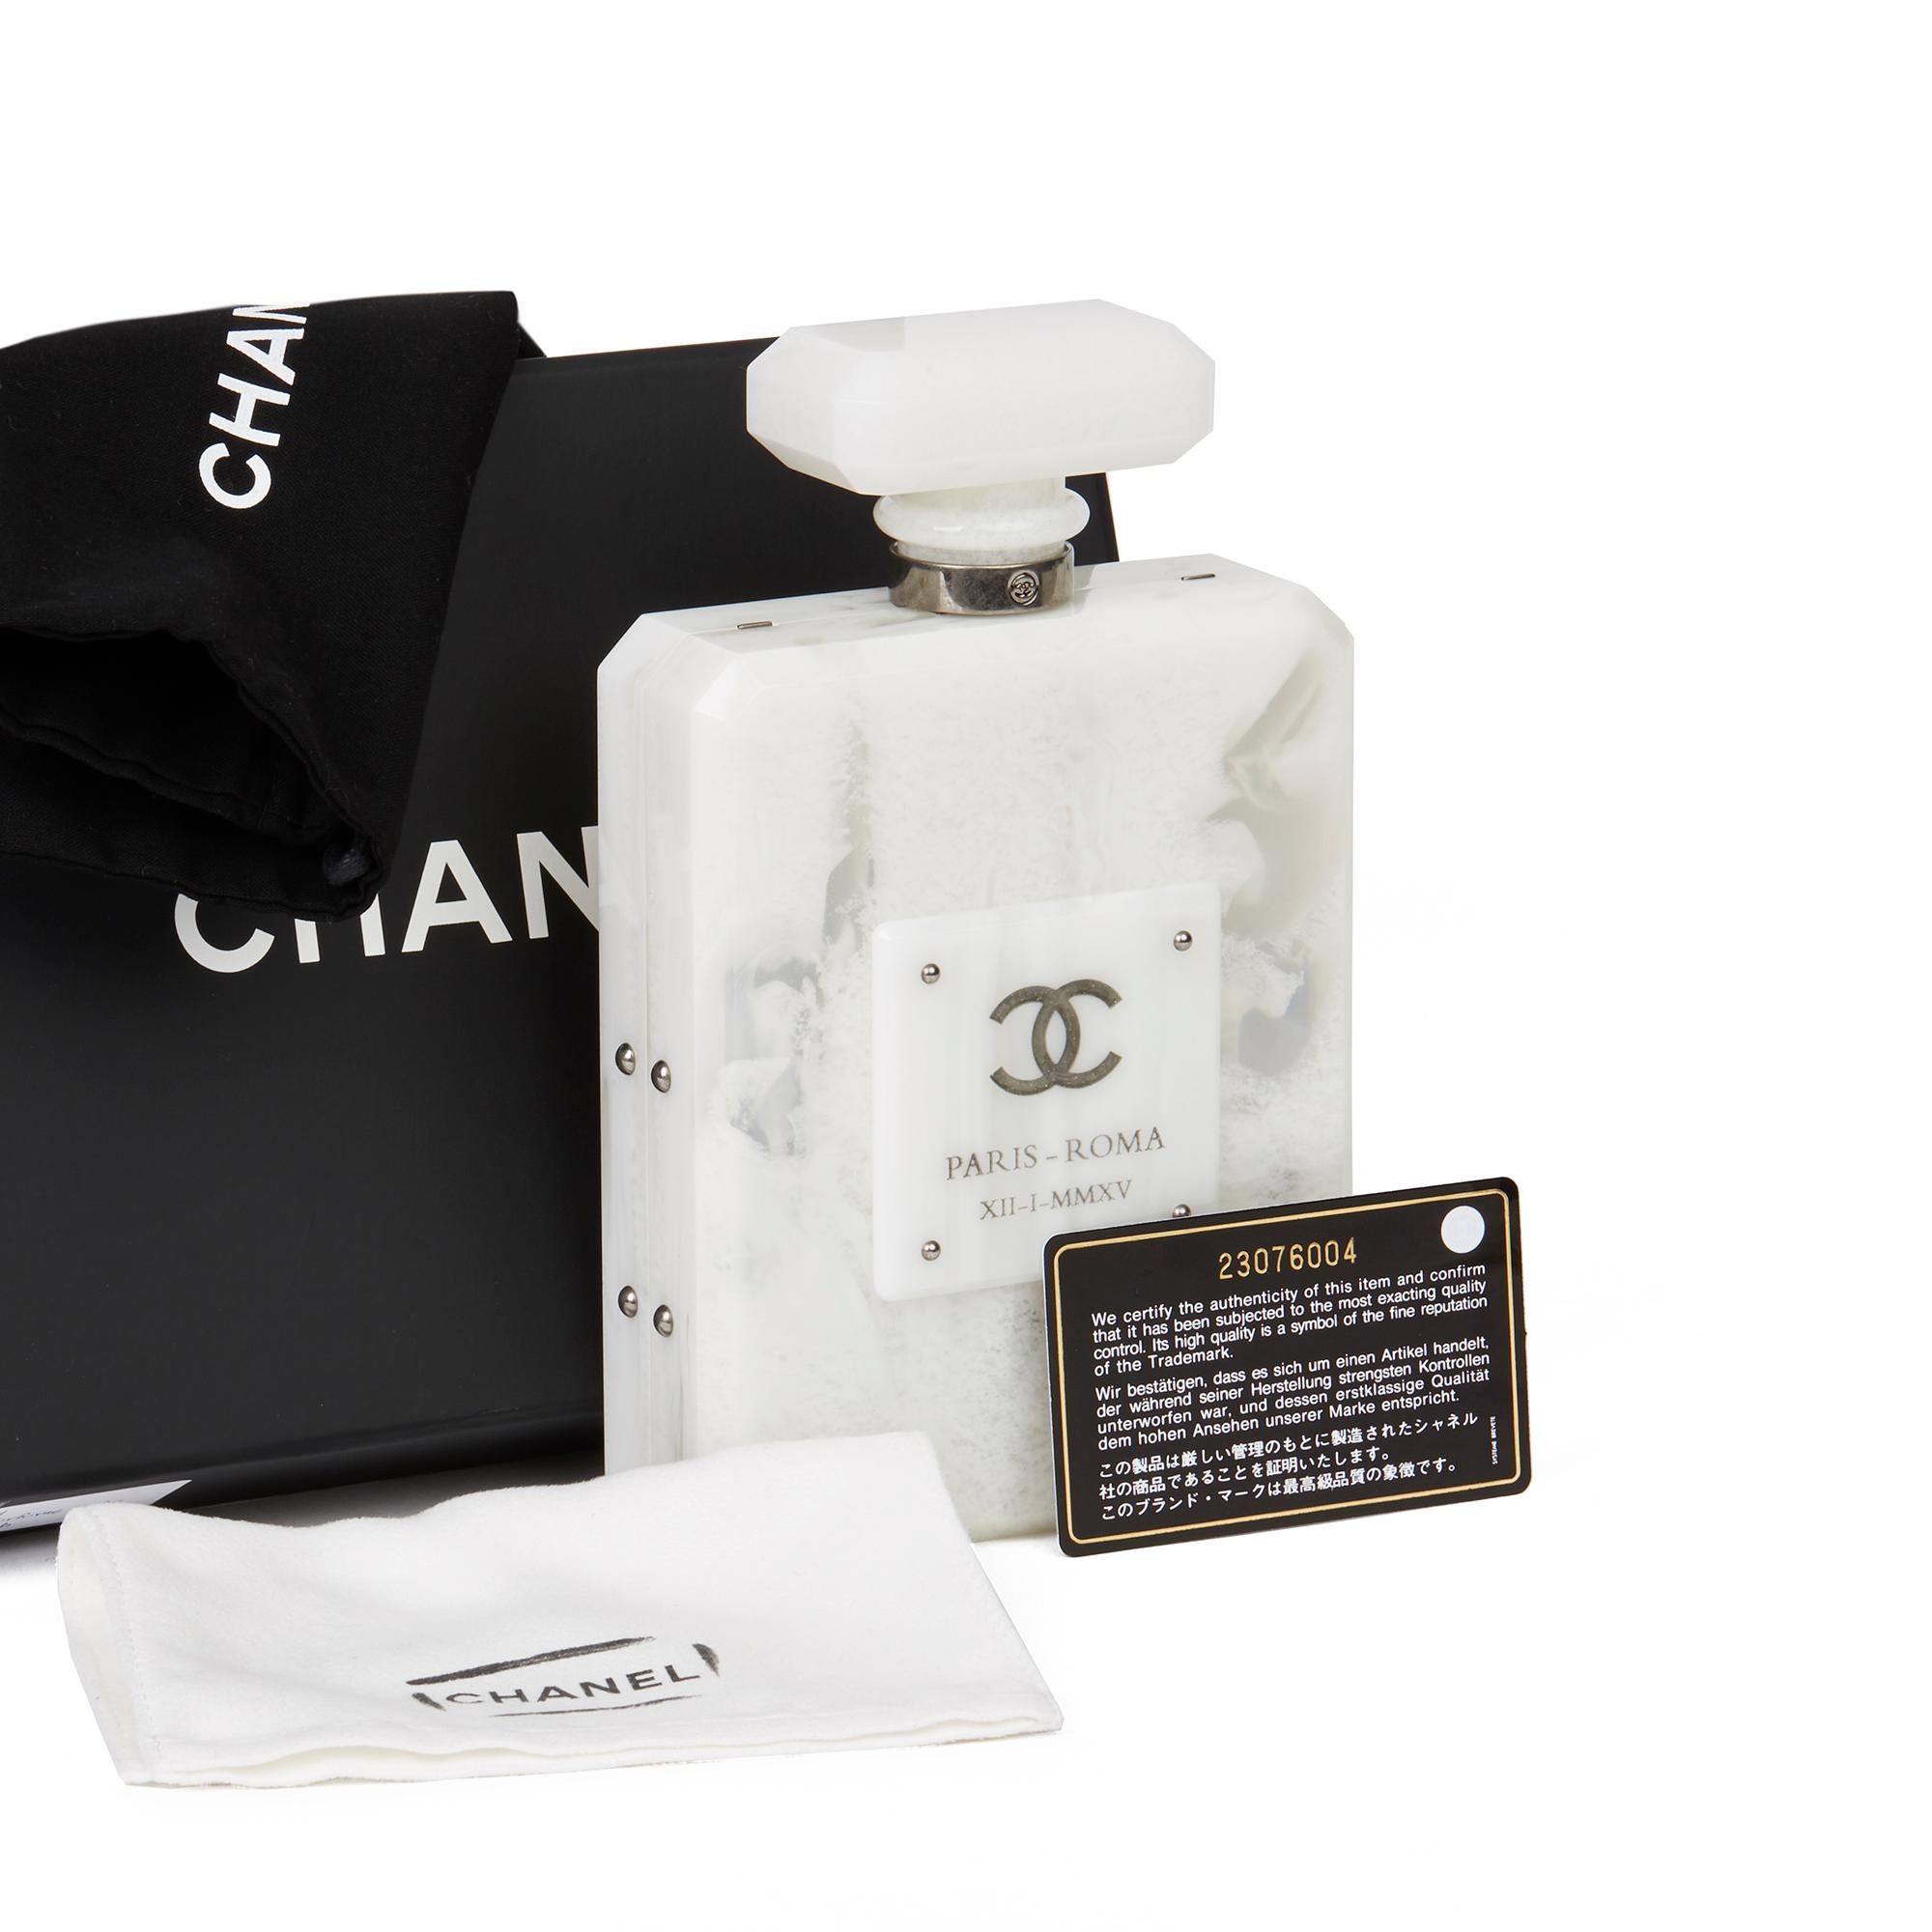 2016 Chanel White Marble Plexiglass Paris-Rome Perfume Bottle Bag 3